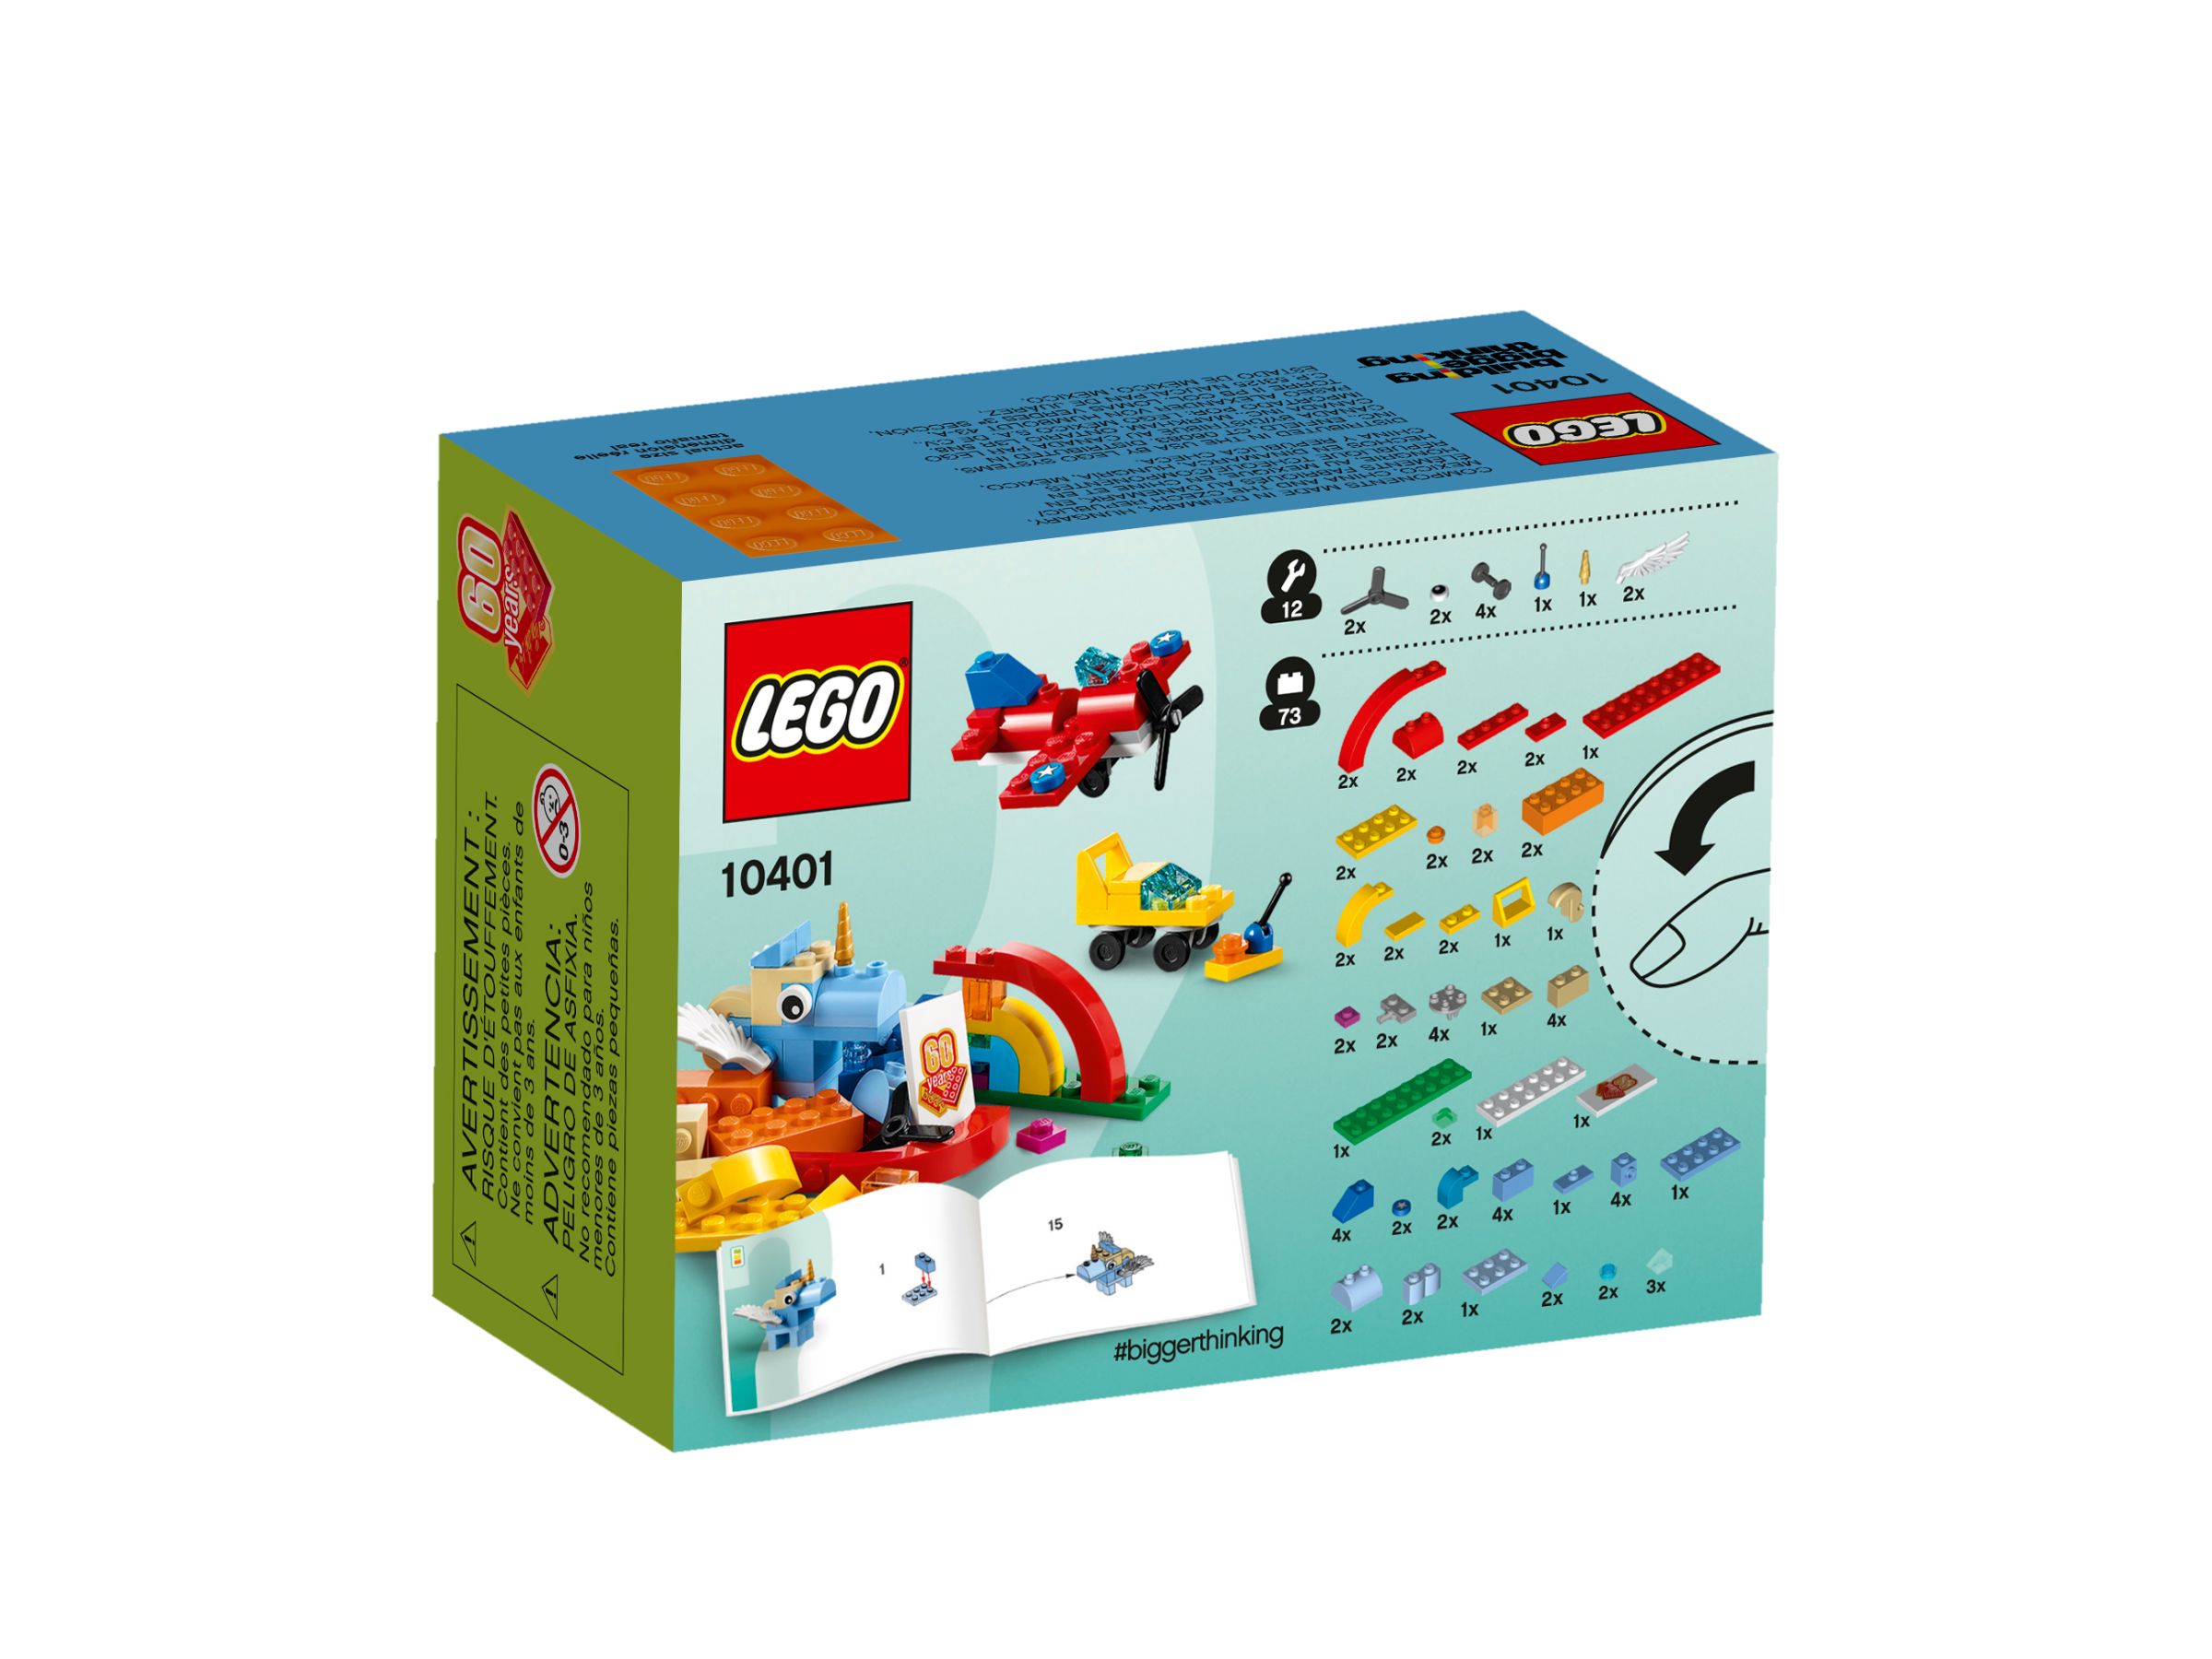 LEGO Building Bigger Thinking 10401 Spaß mit dem Regenbogen LEGO_10401_alt2.jpg